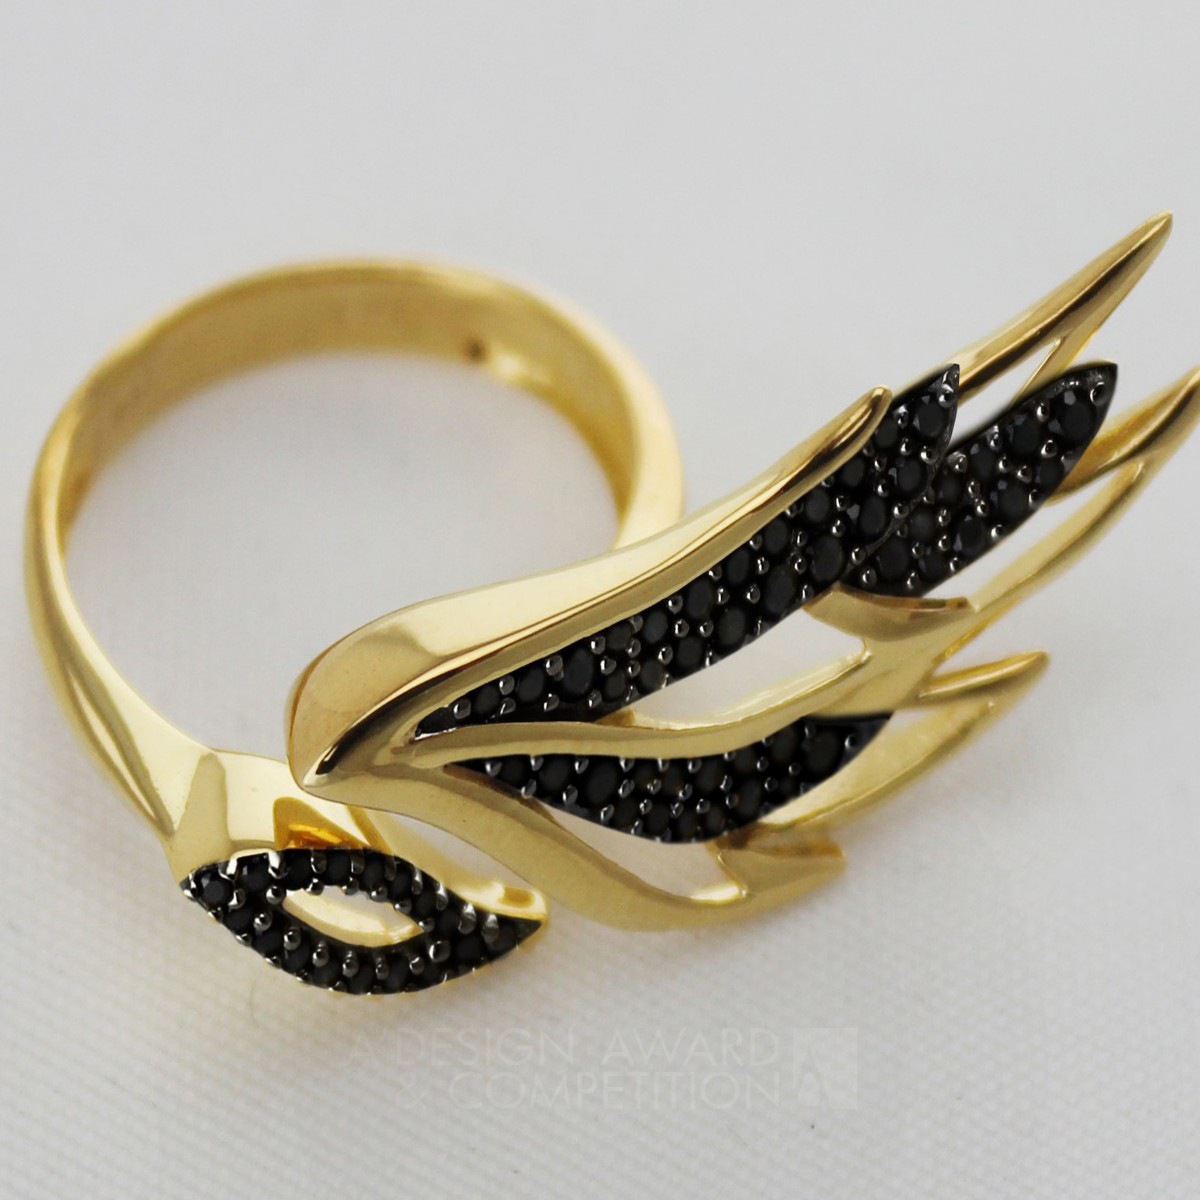 Garuda Collection ring, earrings by Amelia Rachim